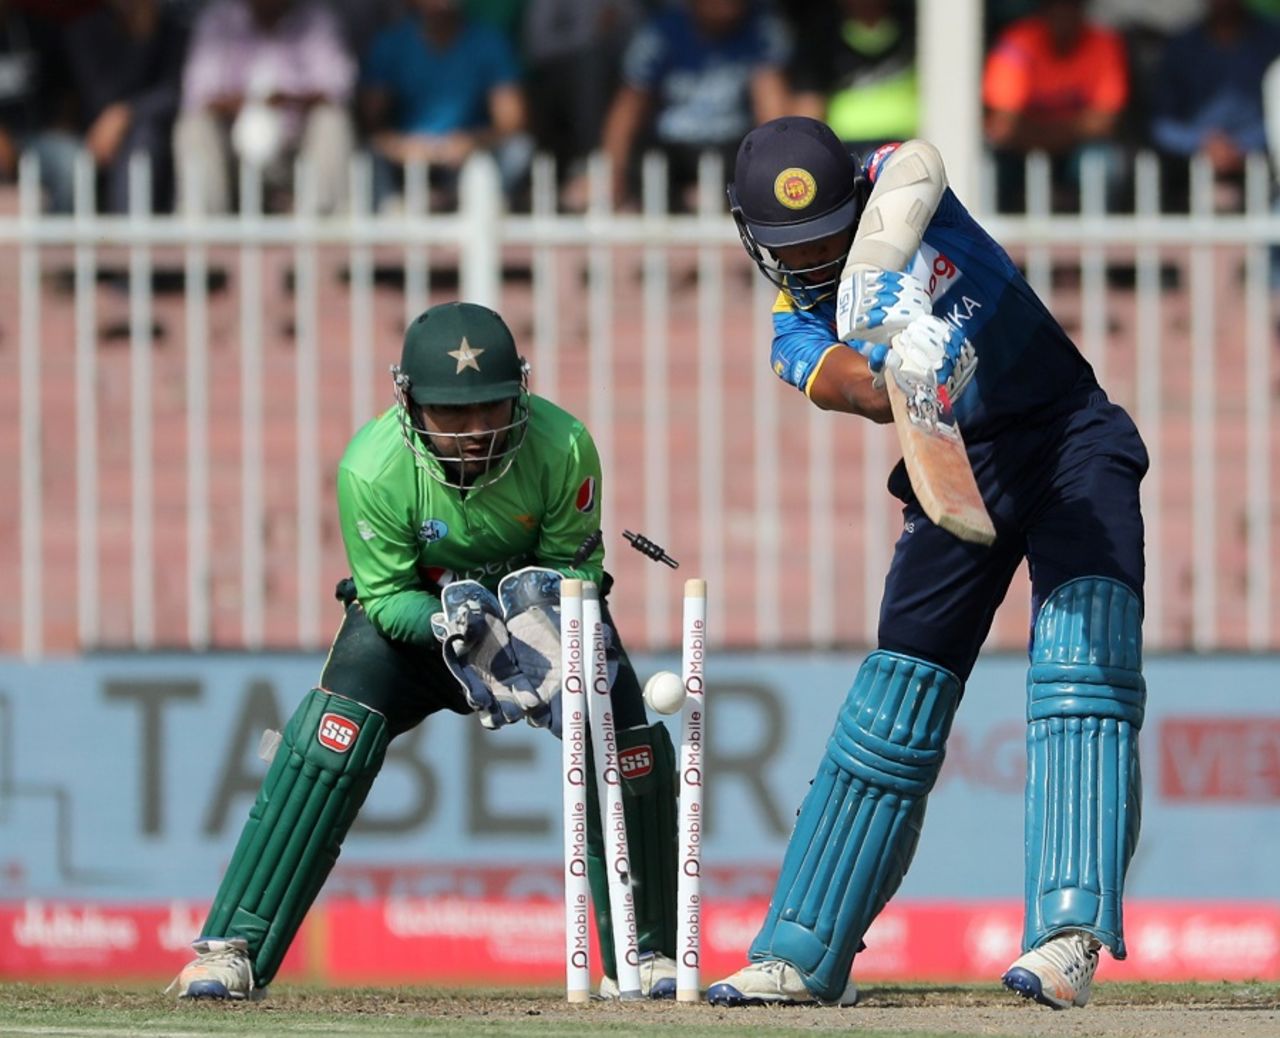 Sadeera Samarawickrama was bowled for a duck on ODI debut, Pakistan v Sri Lanka, 4th ODI, Sharjah